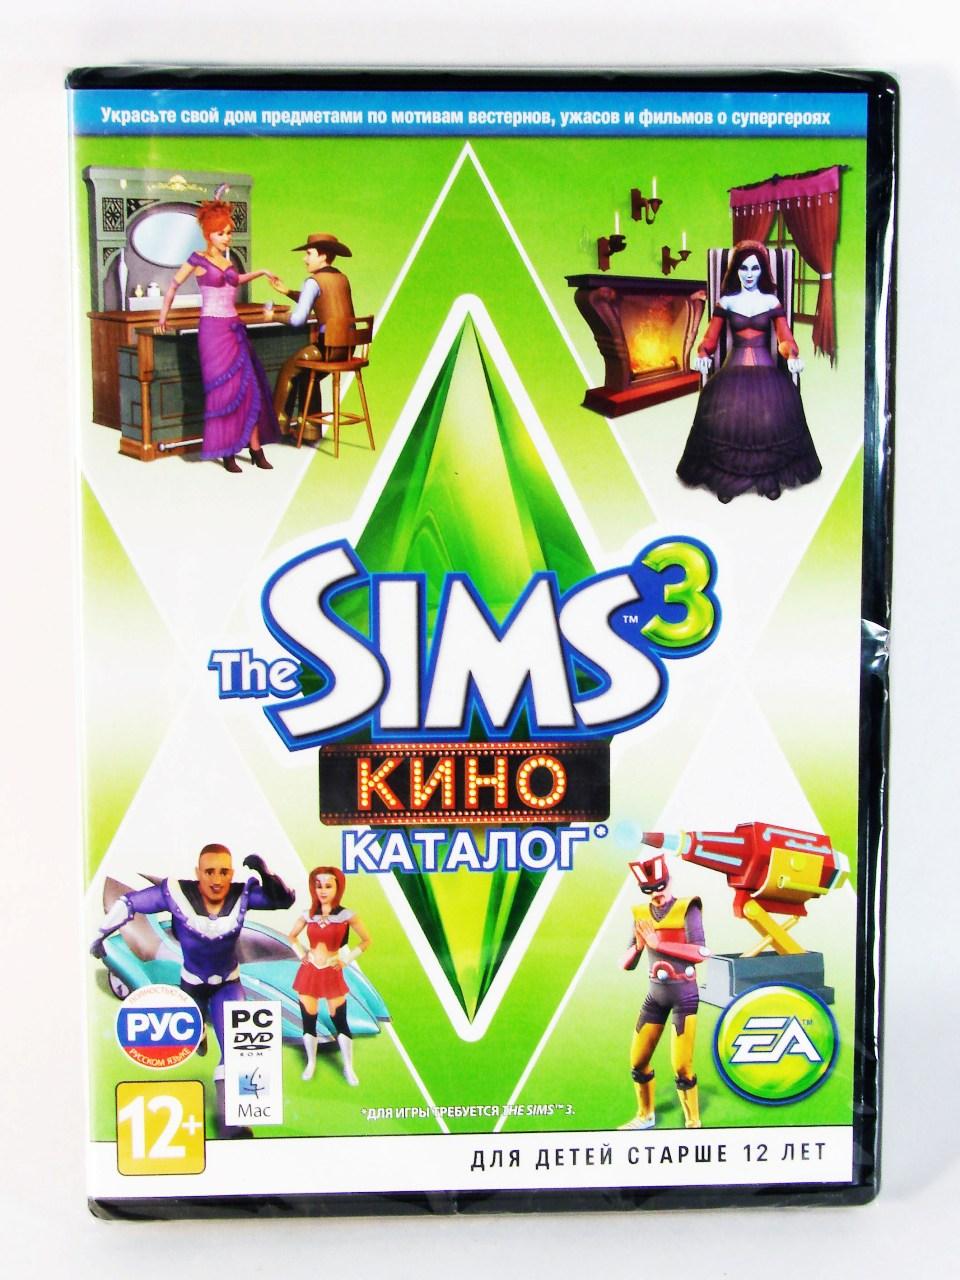  - Sims 3  (),  "Electronic Arts", 1DVD